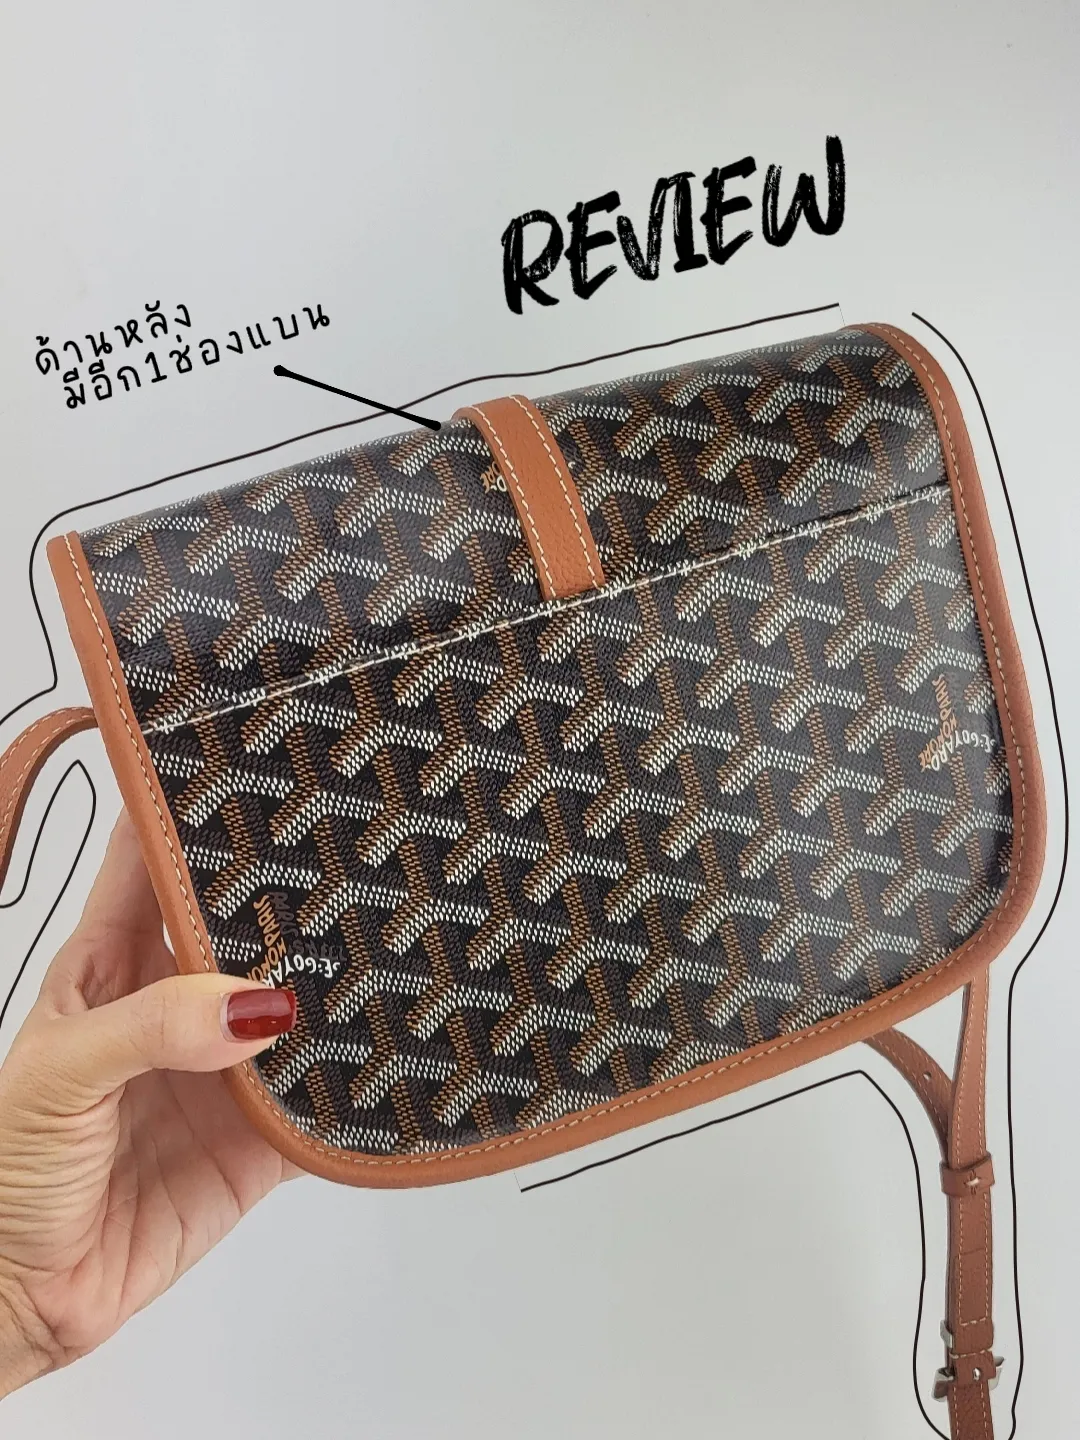 Goyard Belvedere Messenger Bag Review 